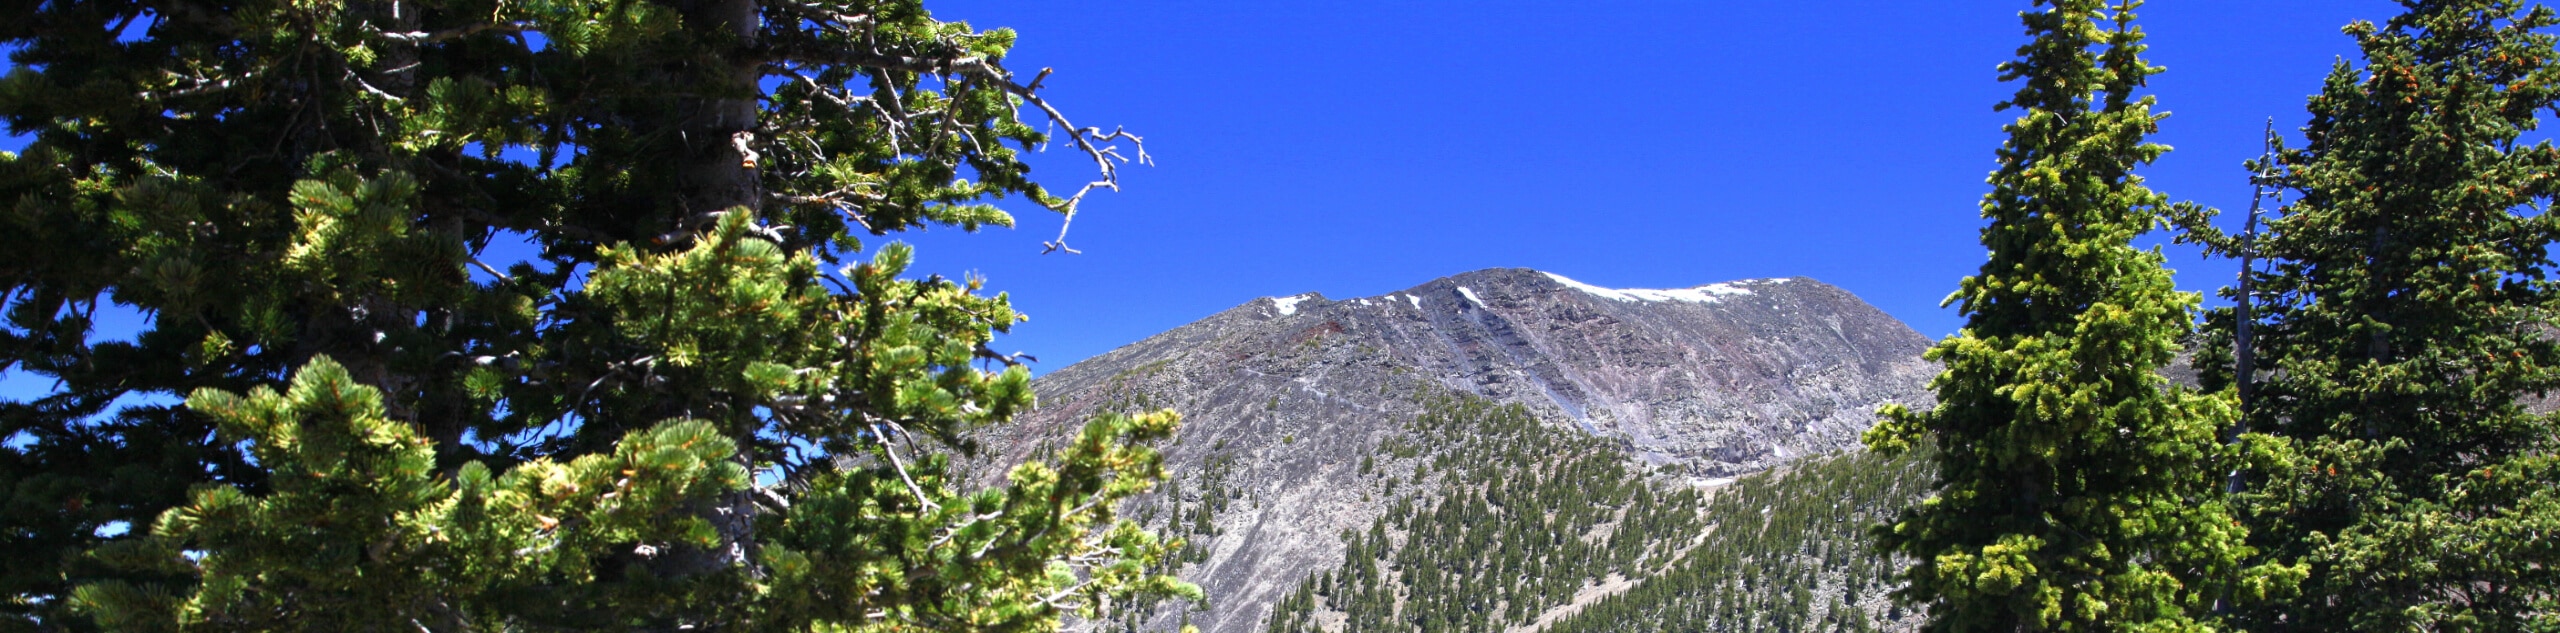 Humphrey's Peak via Inner Basin Trail